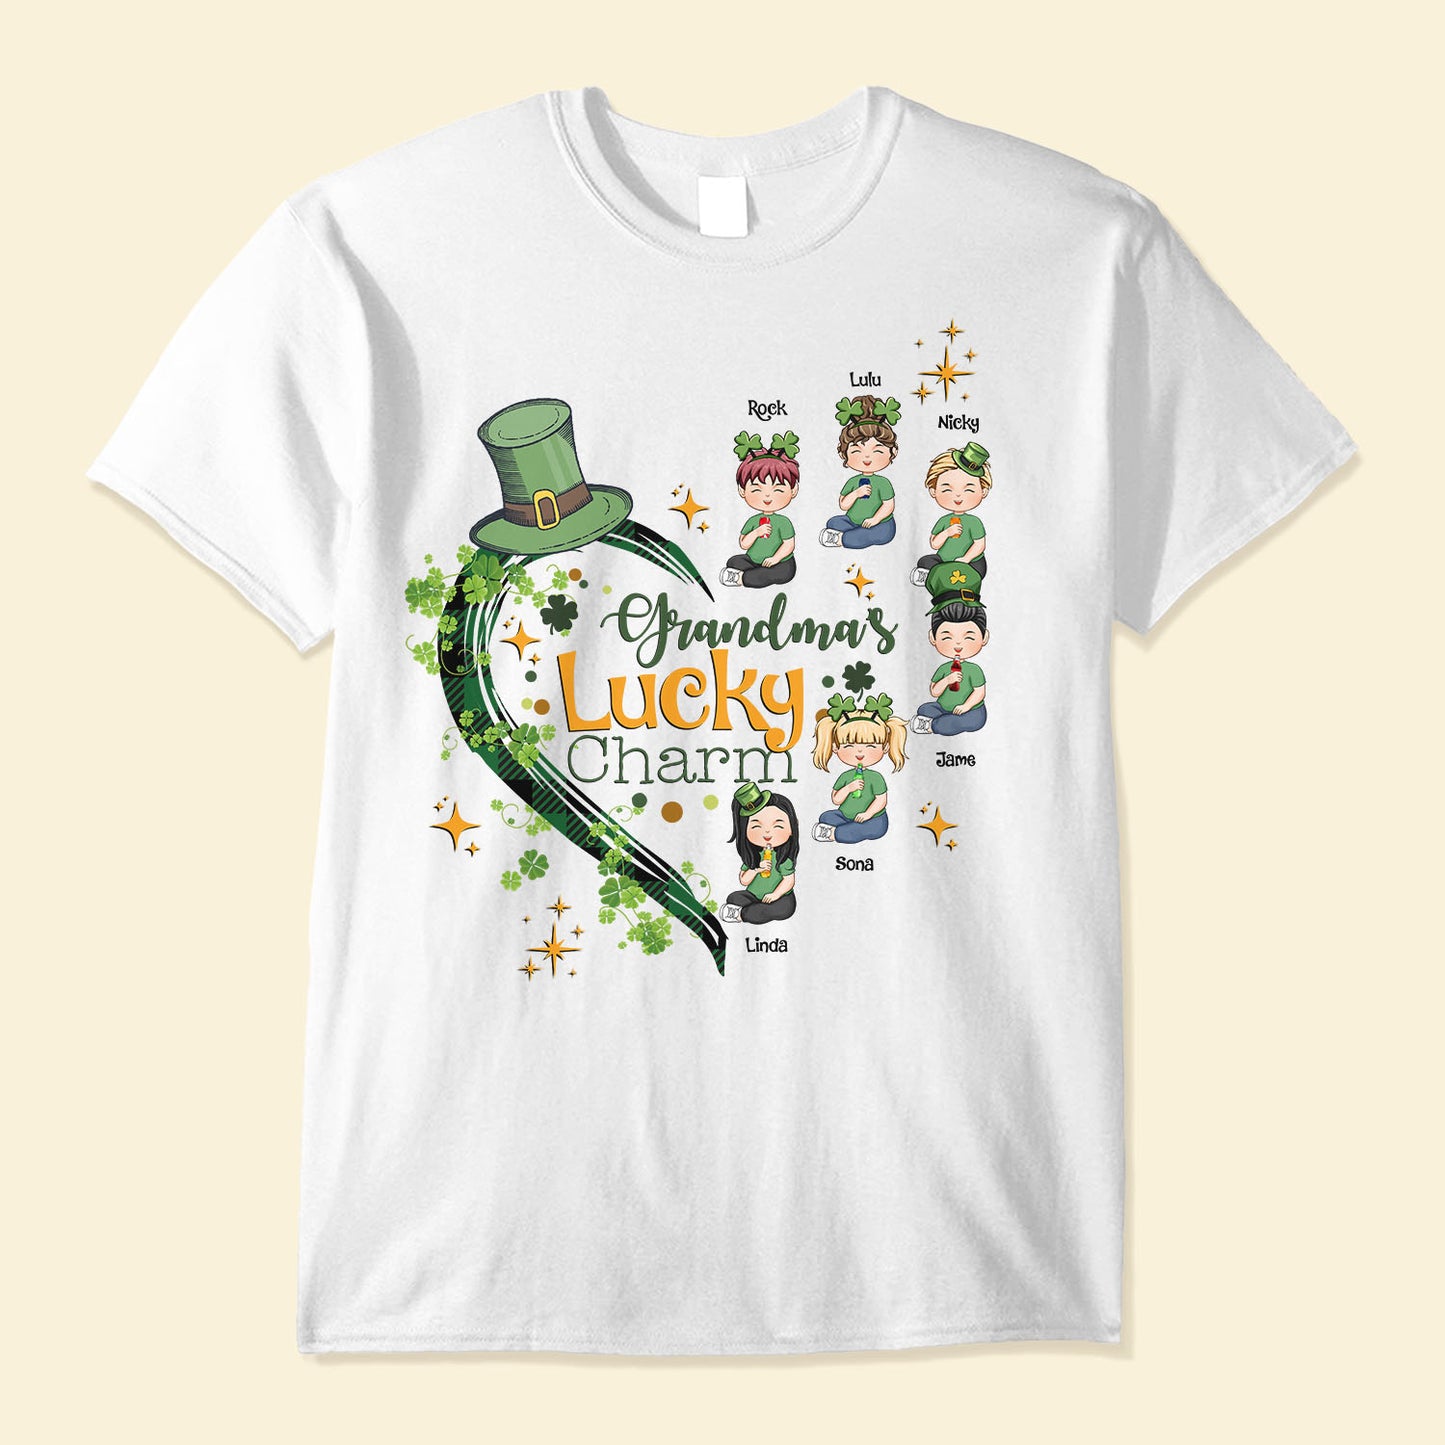 Grandma's Lucky Charm - Personalized Shirt - St. Patrick's Day, Birthday, Loving Gift For Grandma, Mom, Mother